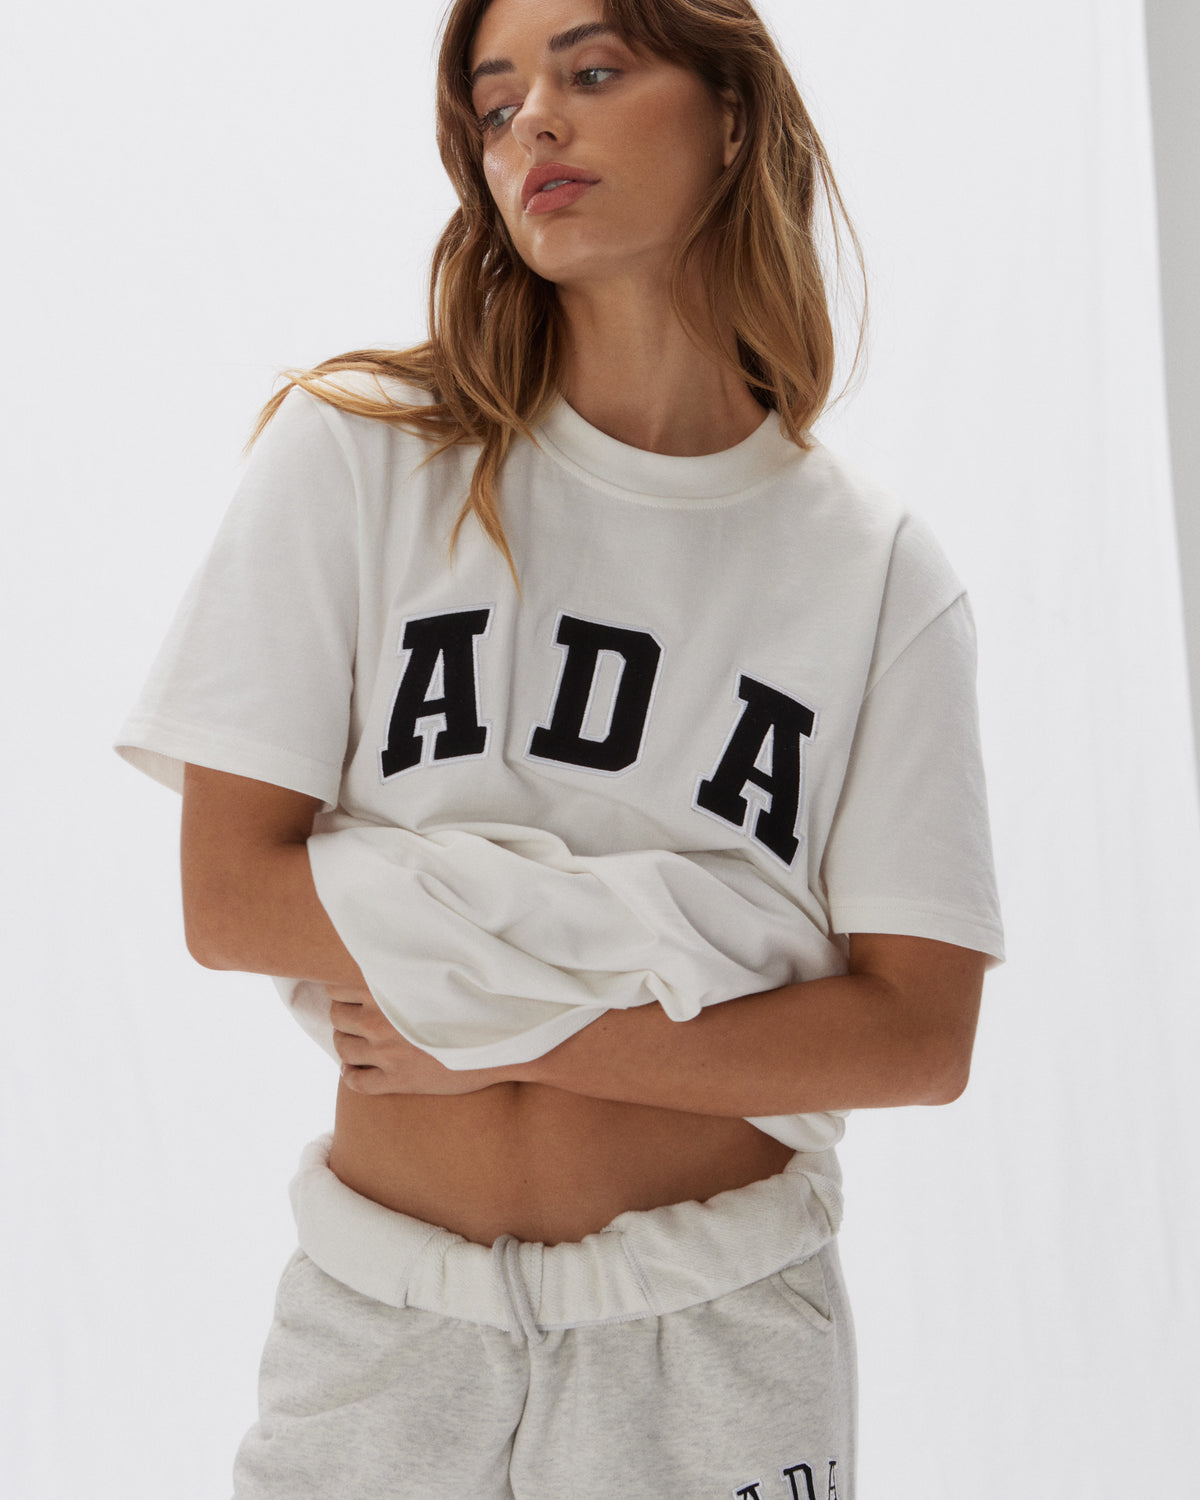 ADA Short Sleeve Oversized T-shirt - White